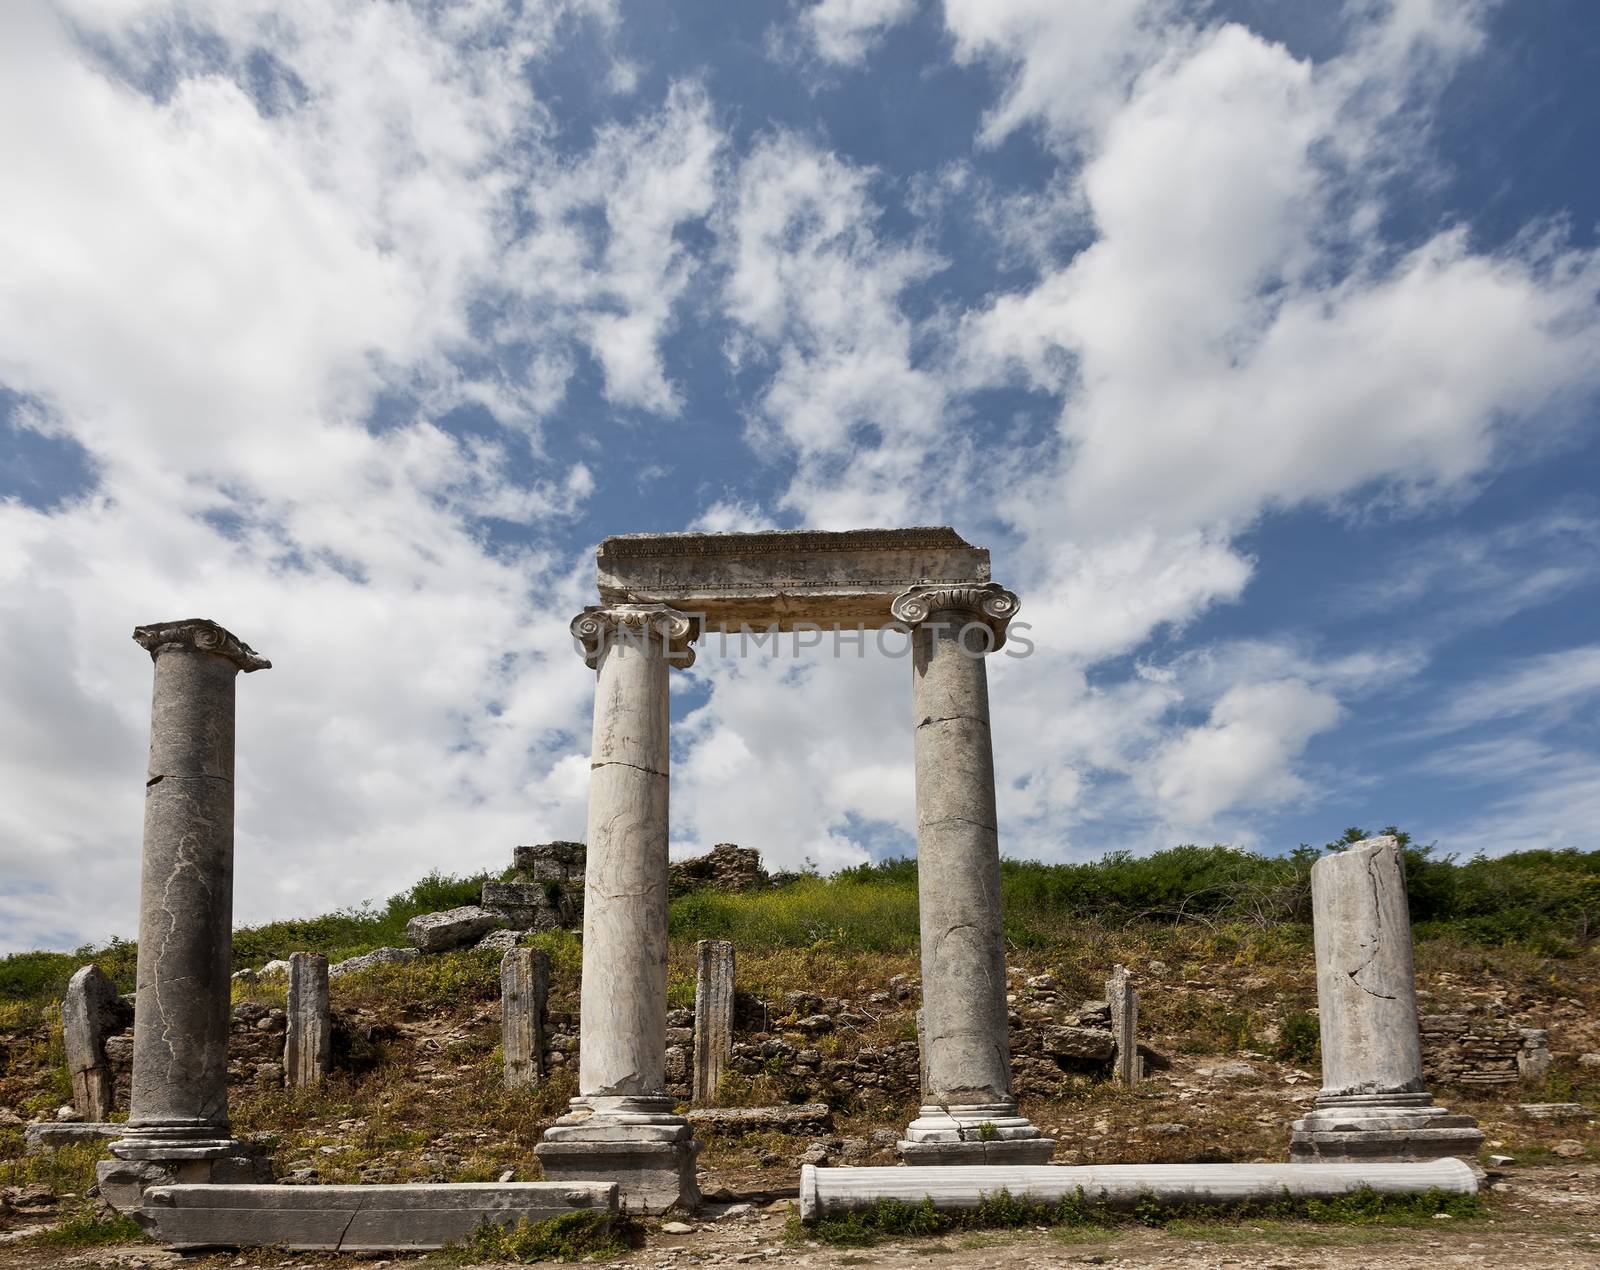 Ancient Columns Lining Main Road at Perga in Turkey by Creatista